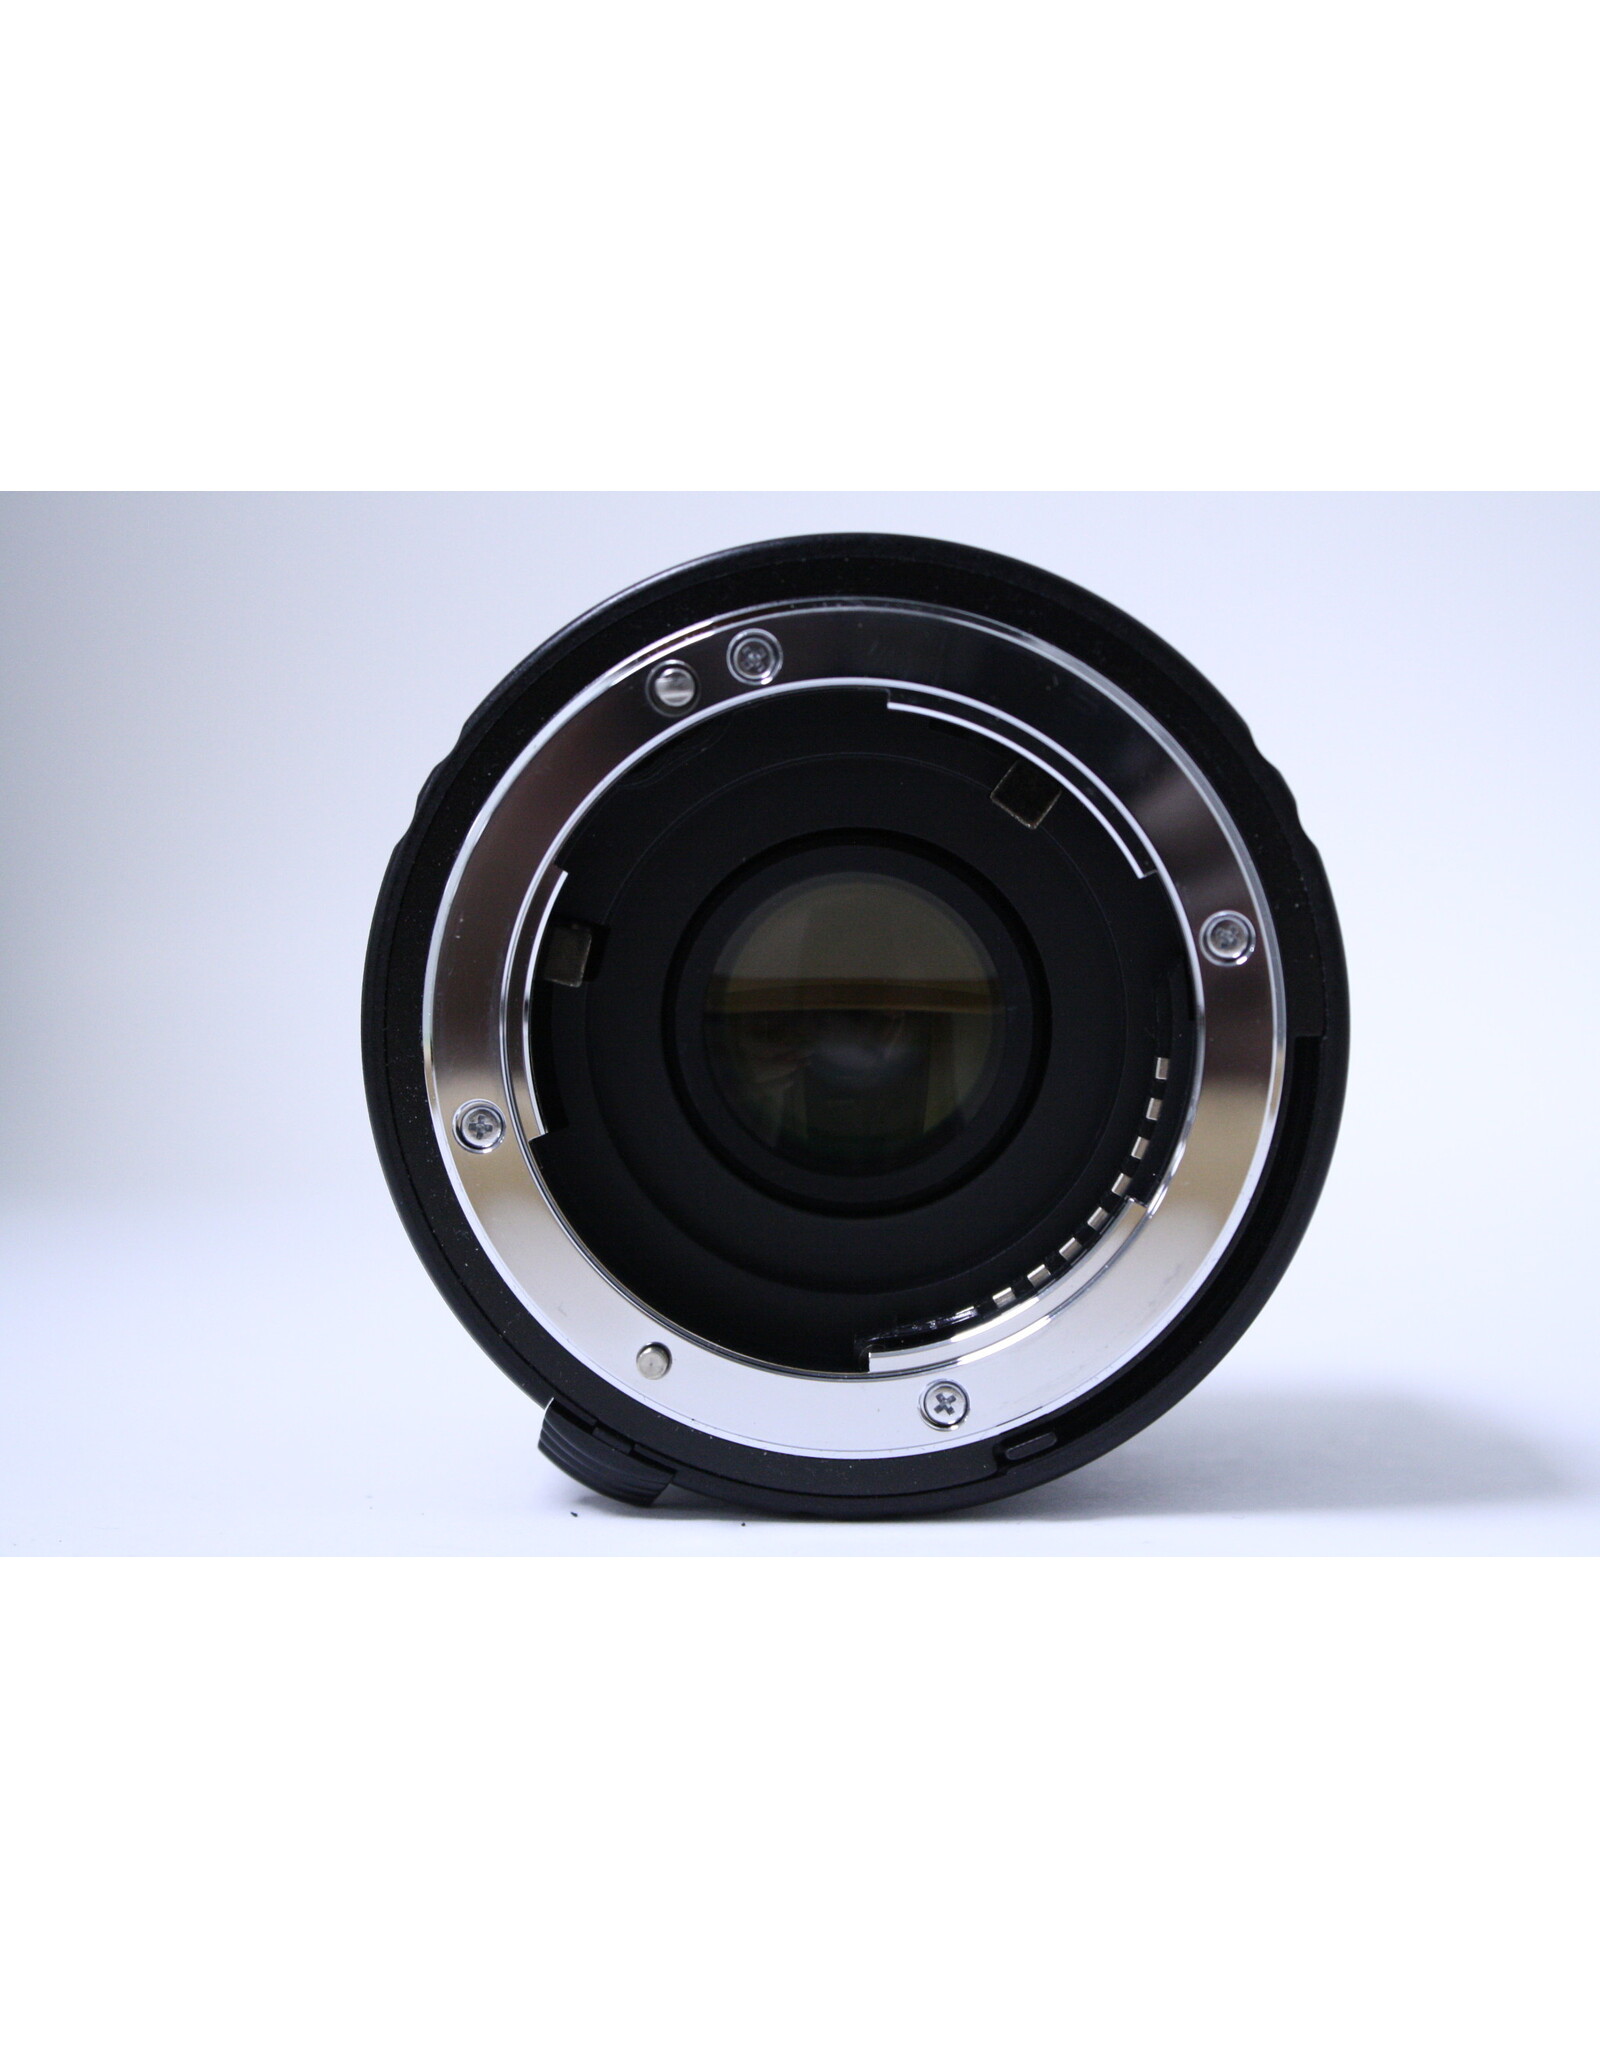 Vivitar Kenko DG TelePlus 2x Teleconverter for Nikon AF (Pre-owned)